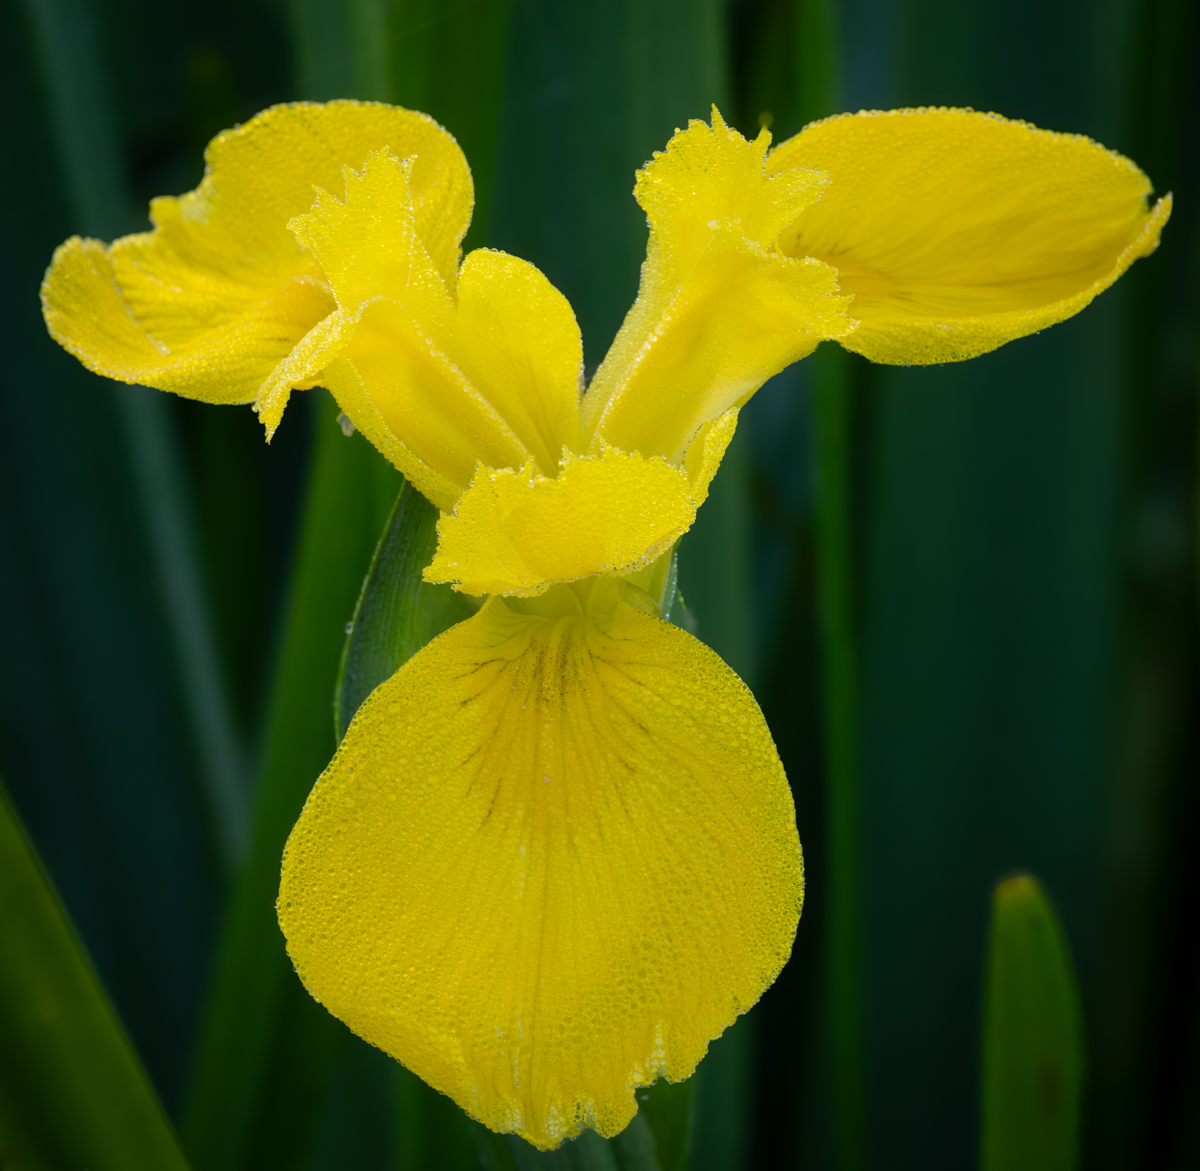 Yellow Iris 
#SundayYellow #Flowers